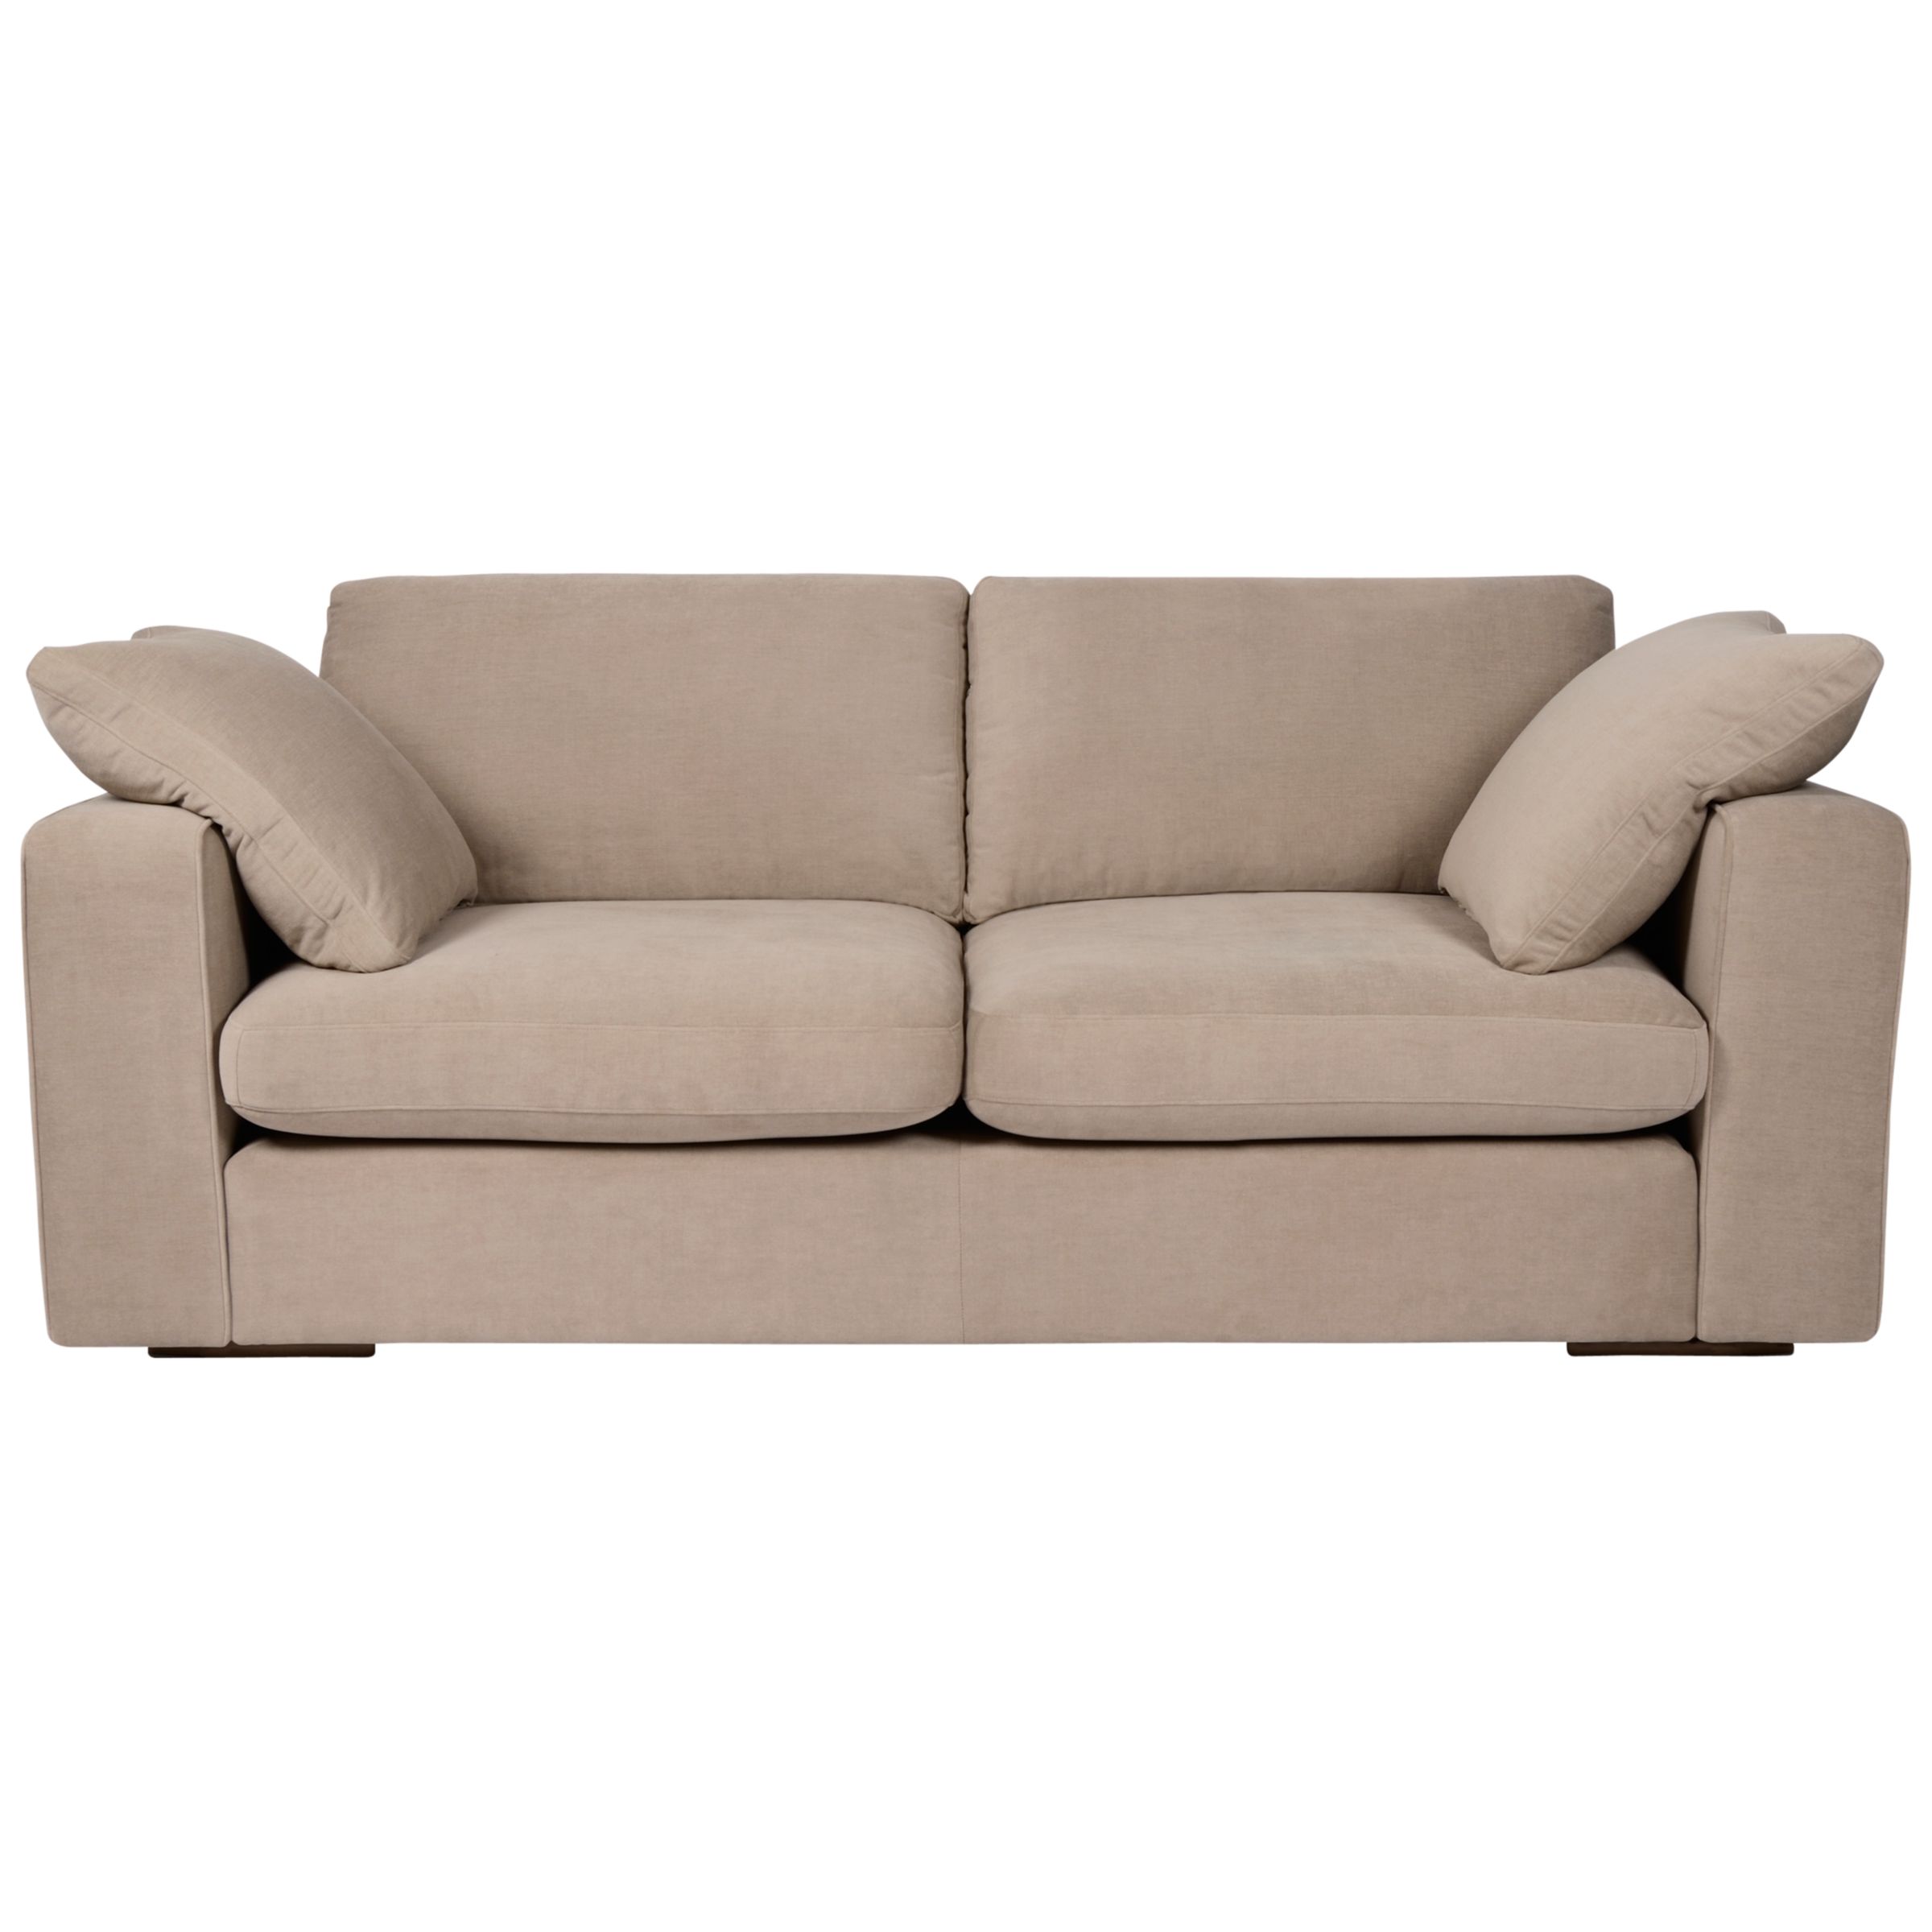 John Lewis Jones Options 2 Square Arm Large Sofa, Devin Oatmeal, width 208cm